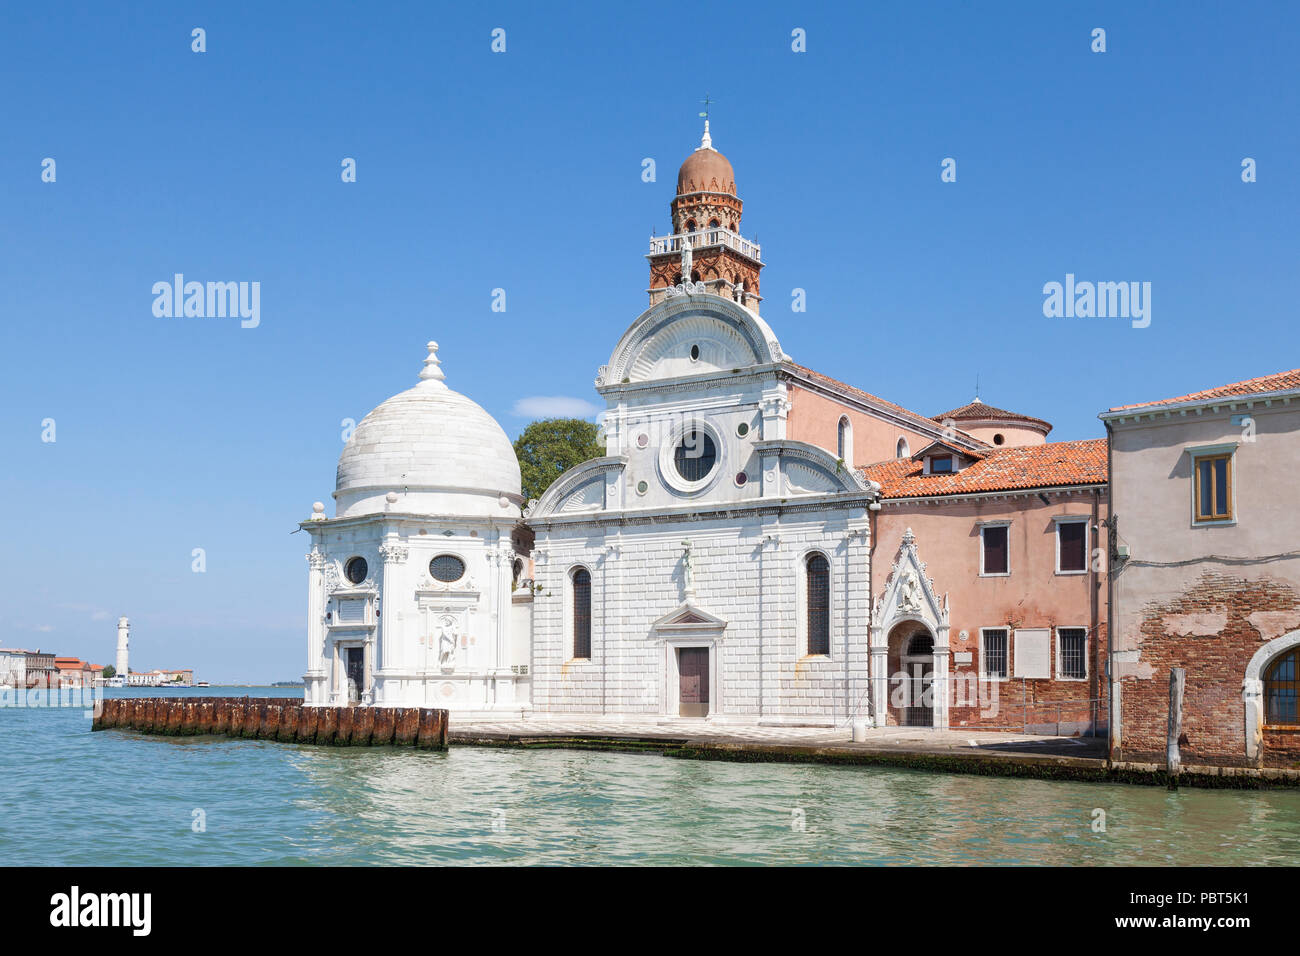 Renaissance facade  of Chiesa di San Michele in Isola, San Michele Island, Venice, Veneto, Italy. Built 1469. Cemetery island. Murano lighthouse behin Stock Photo